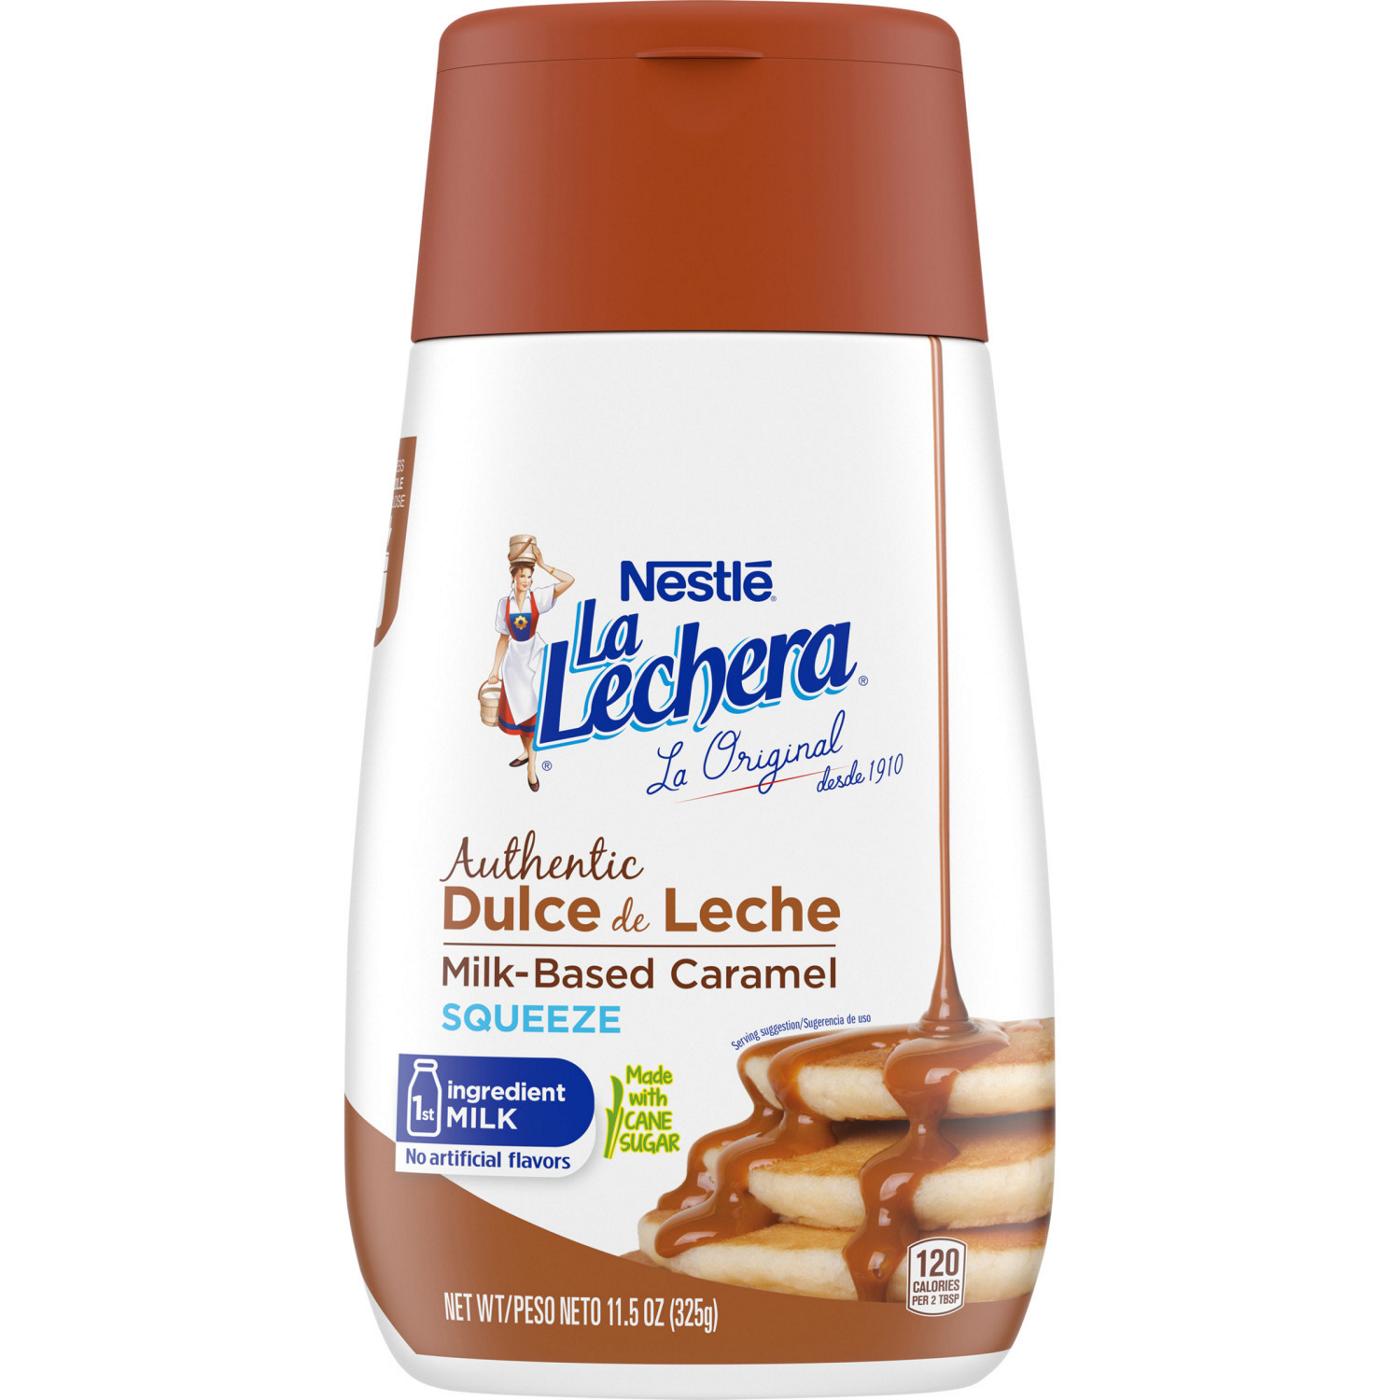 Nestle La Lechera Authentic Dulce de Leche Milk-Based Caramel; image 1 of 2